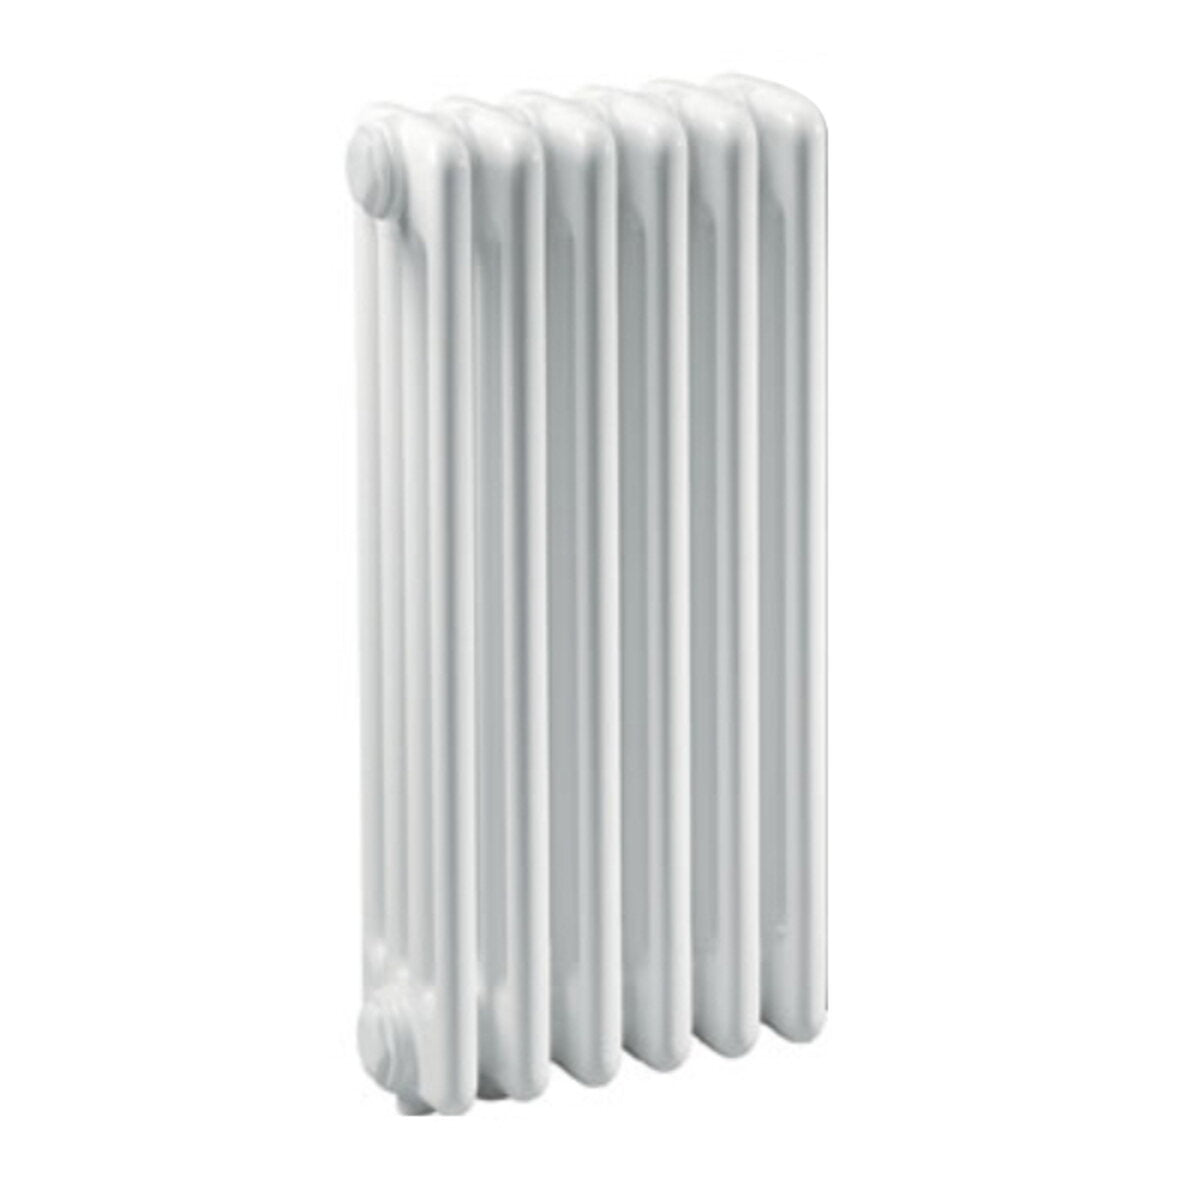 Ercos Comby steel column radiator 6 elements 3 columns center distance 1735 mm